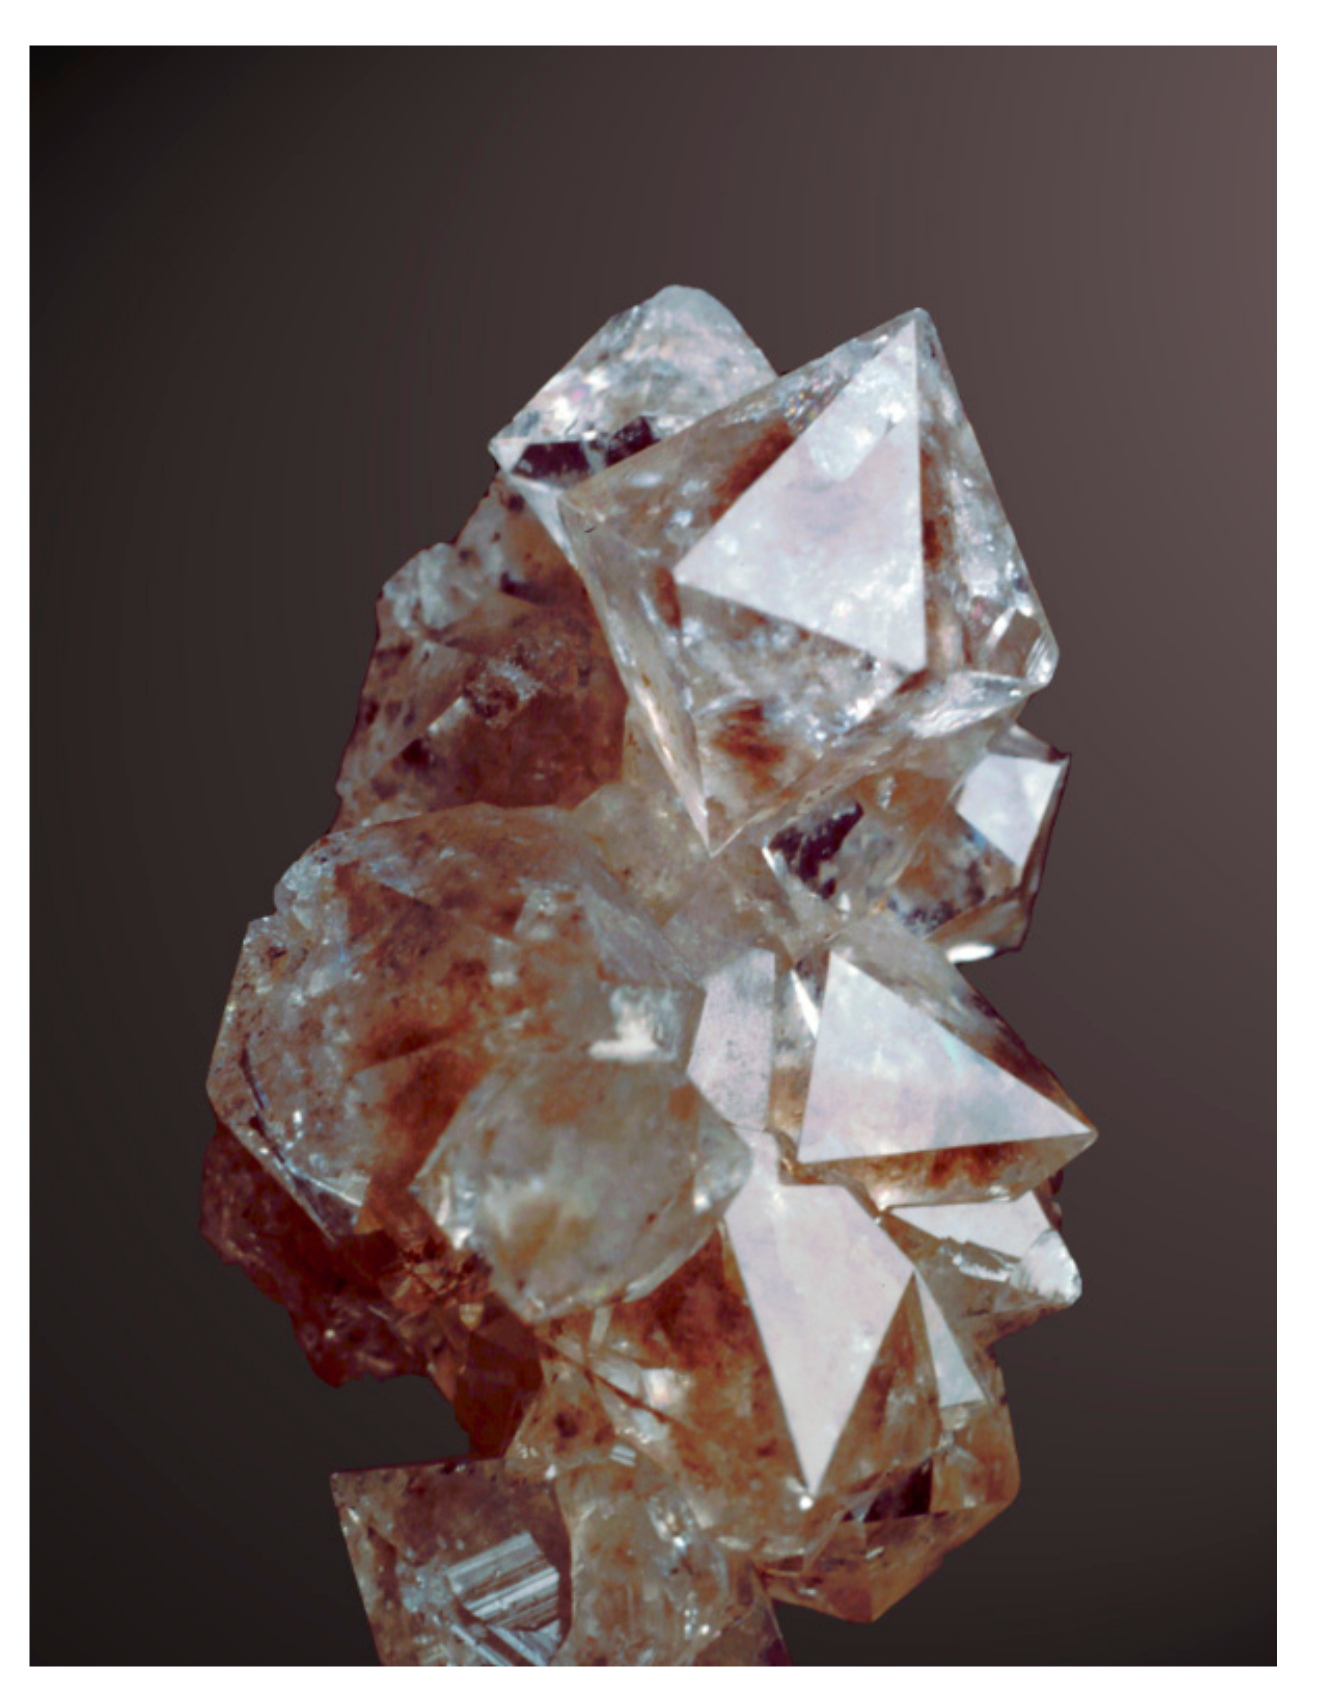 Minerals | Free Full-Text | Mineralogy of Chub Lake-Type Hematite ...